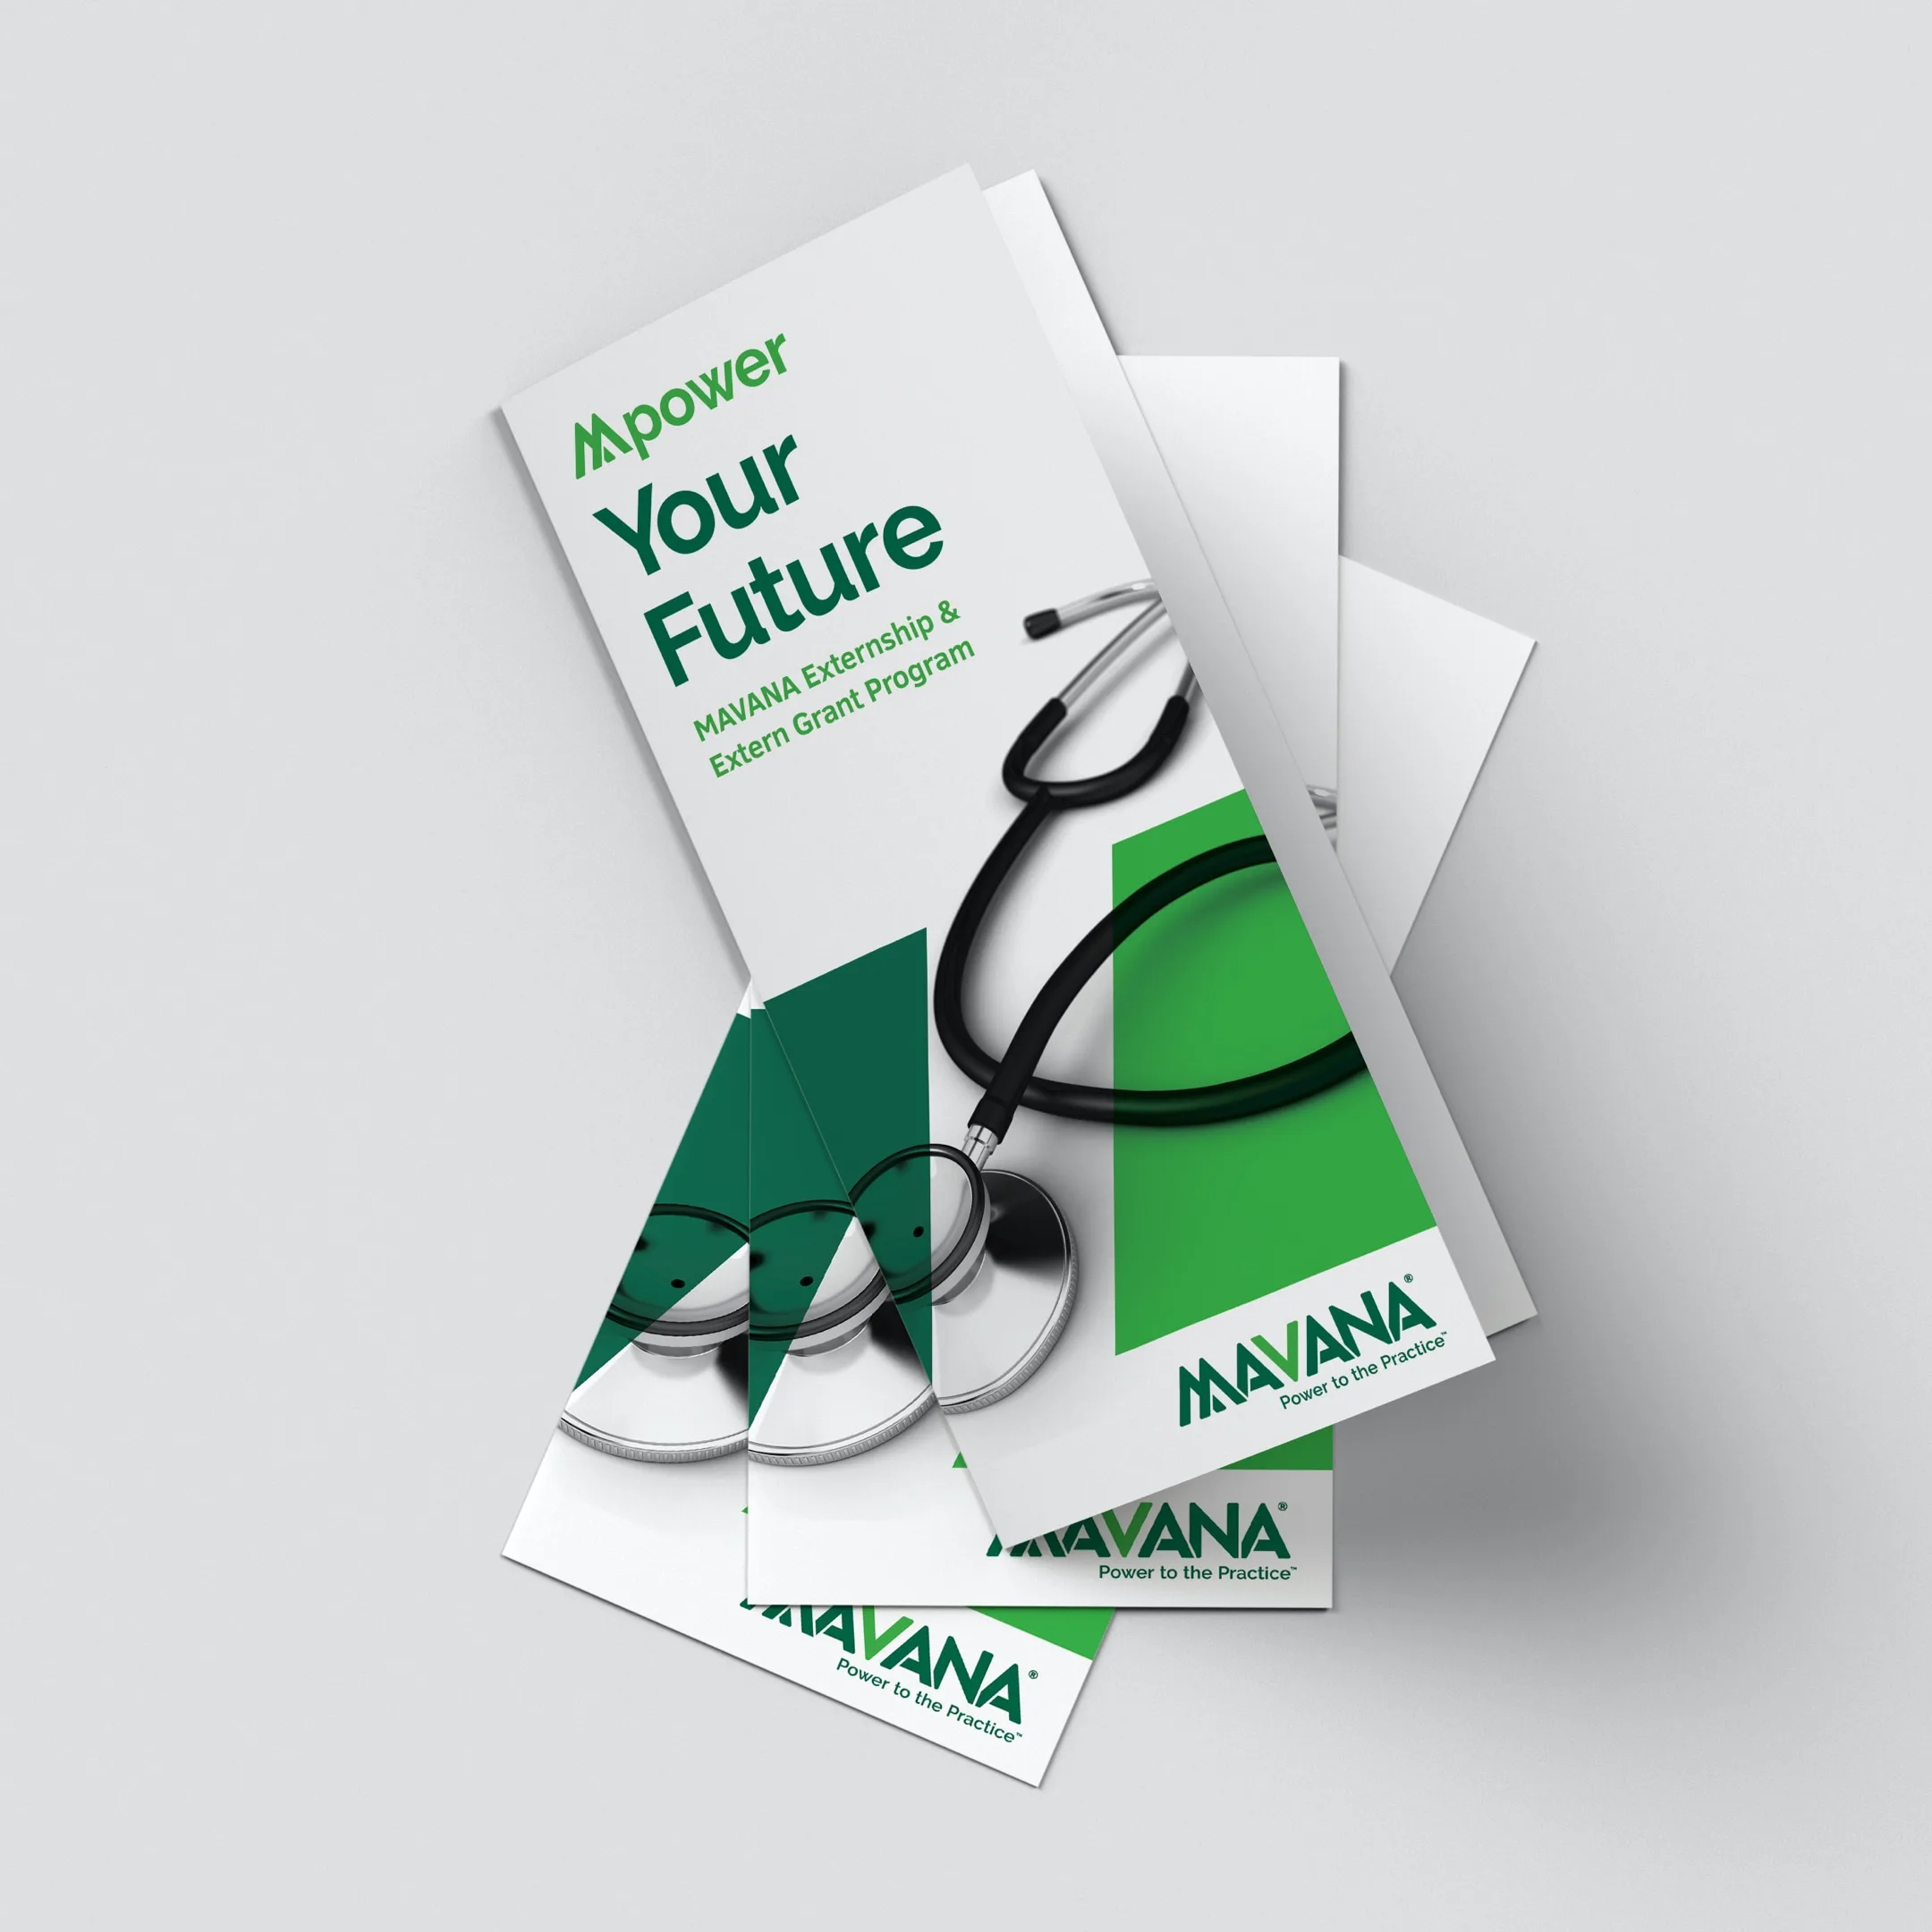 Mavana graphic deisgn, print design, branding, marketing and advertising